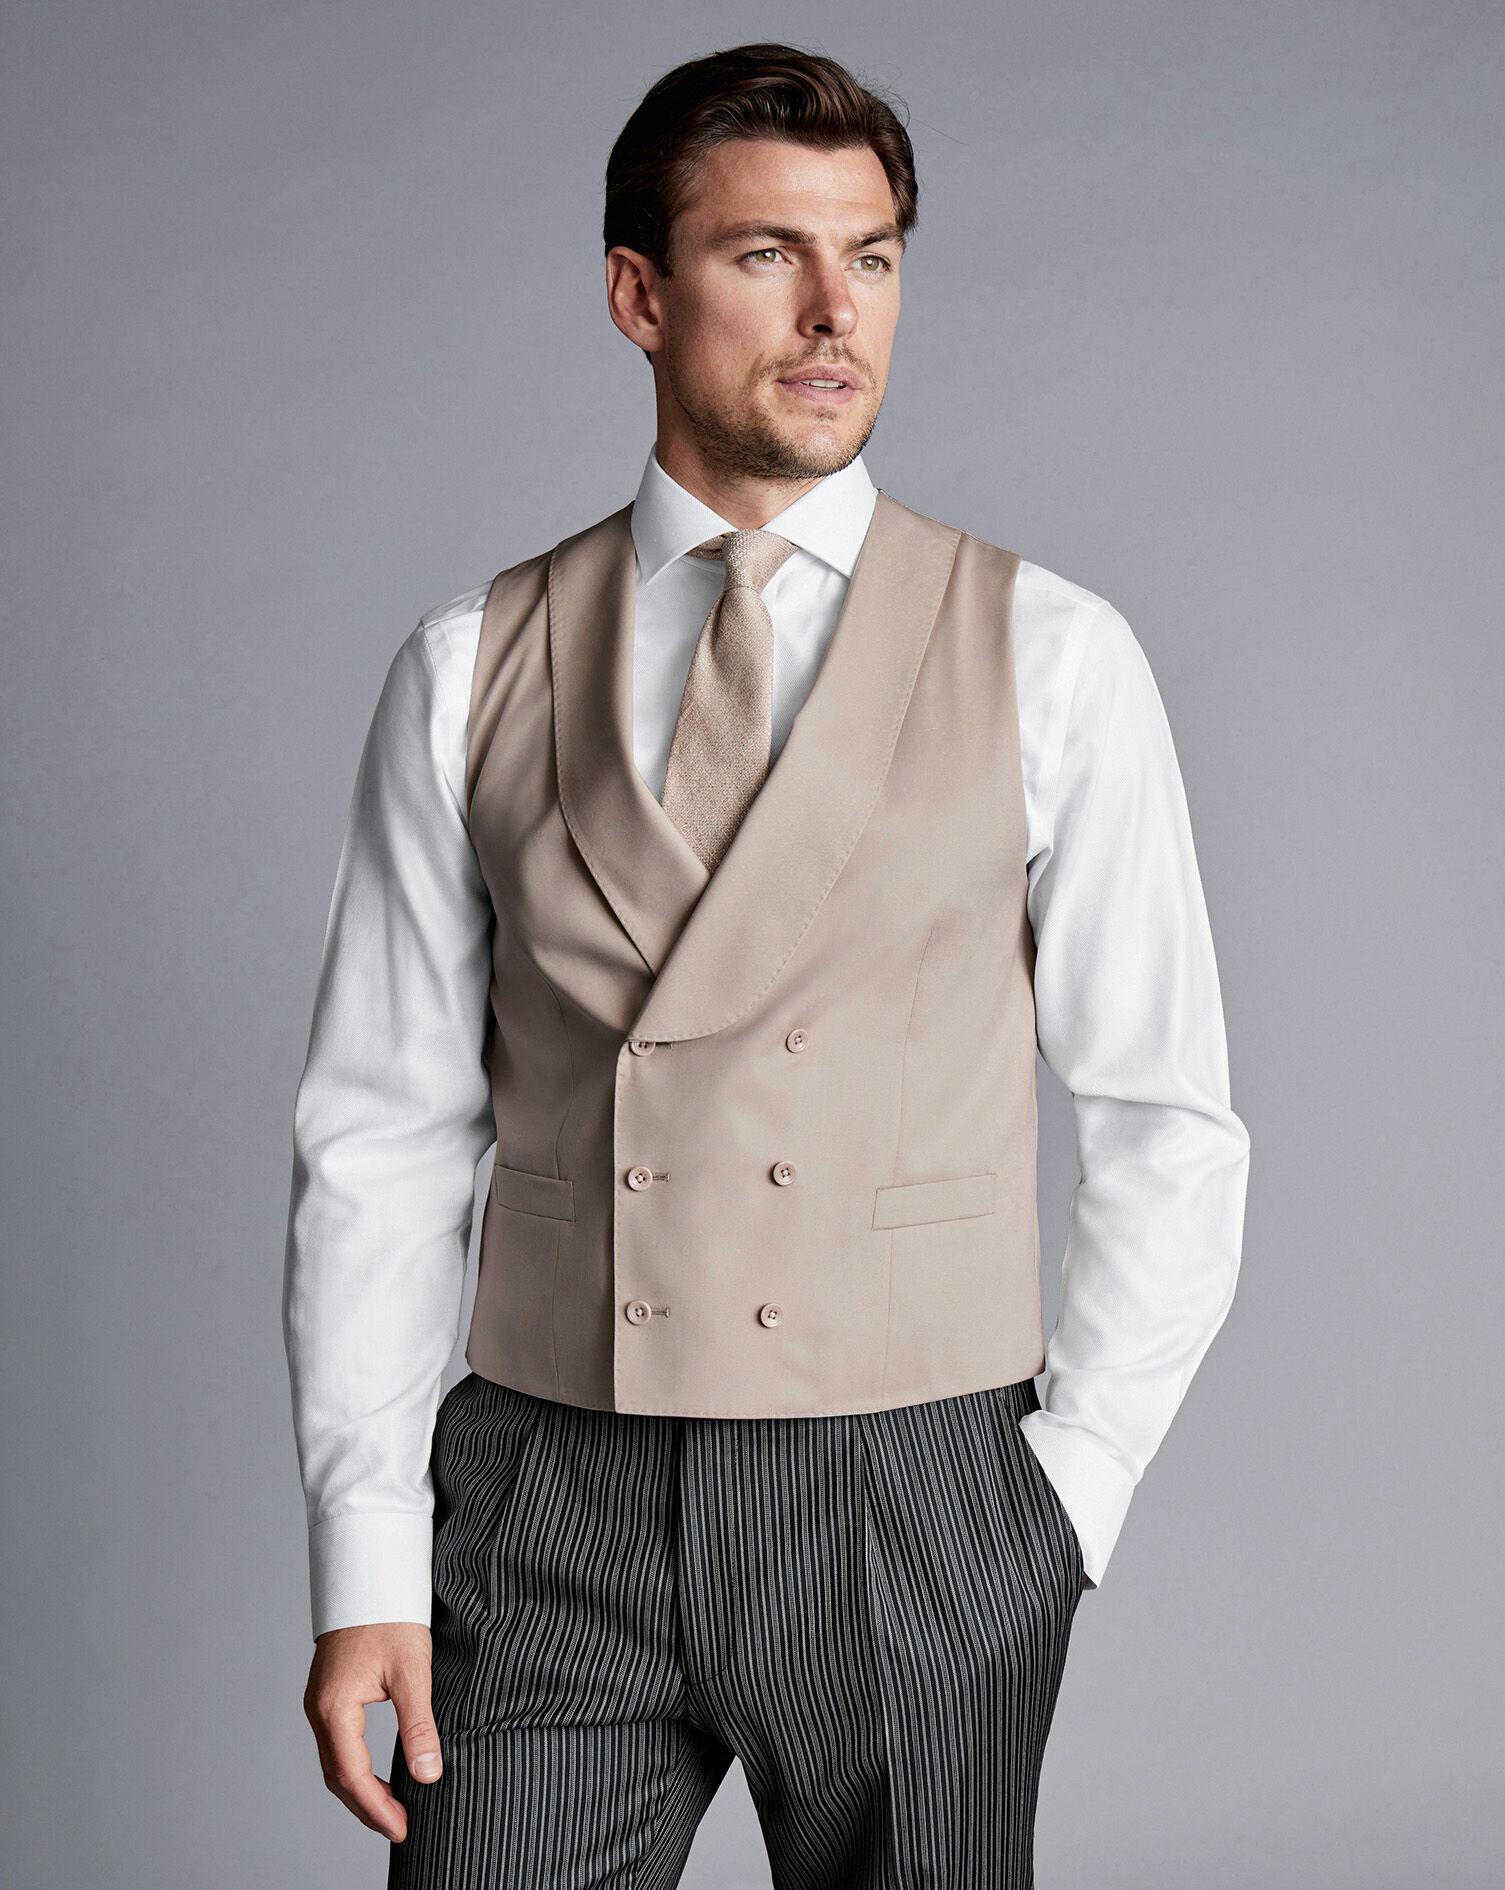 Morning Suit, Waistcoat, Dress Shirt & Tie | Dobell